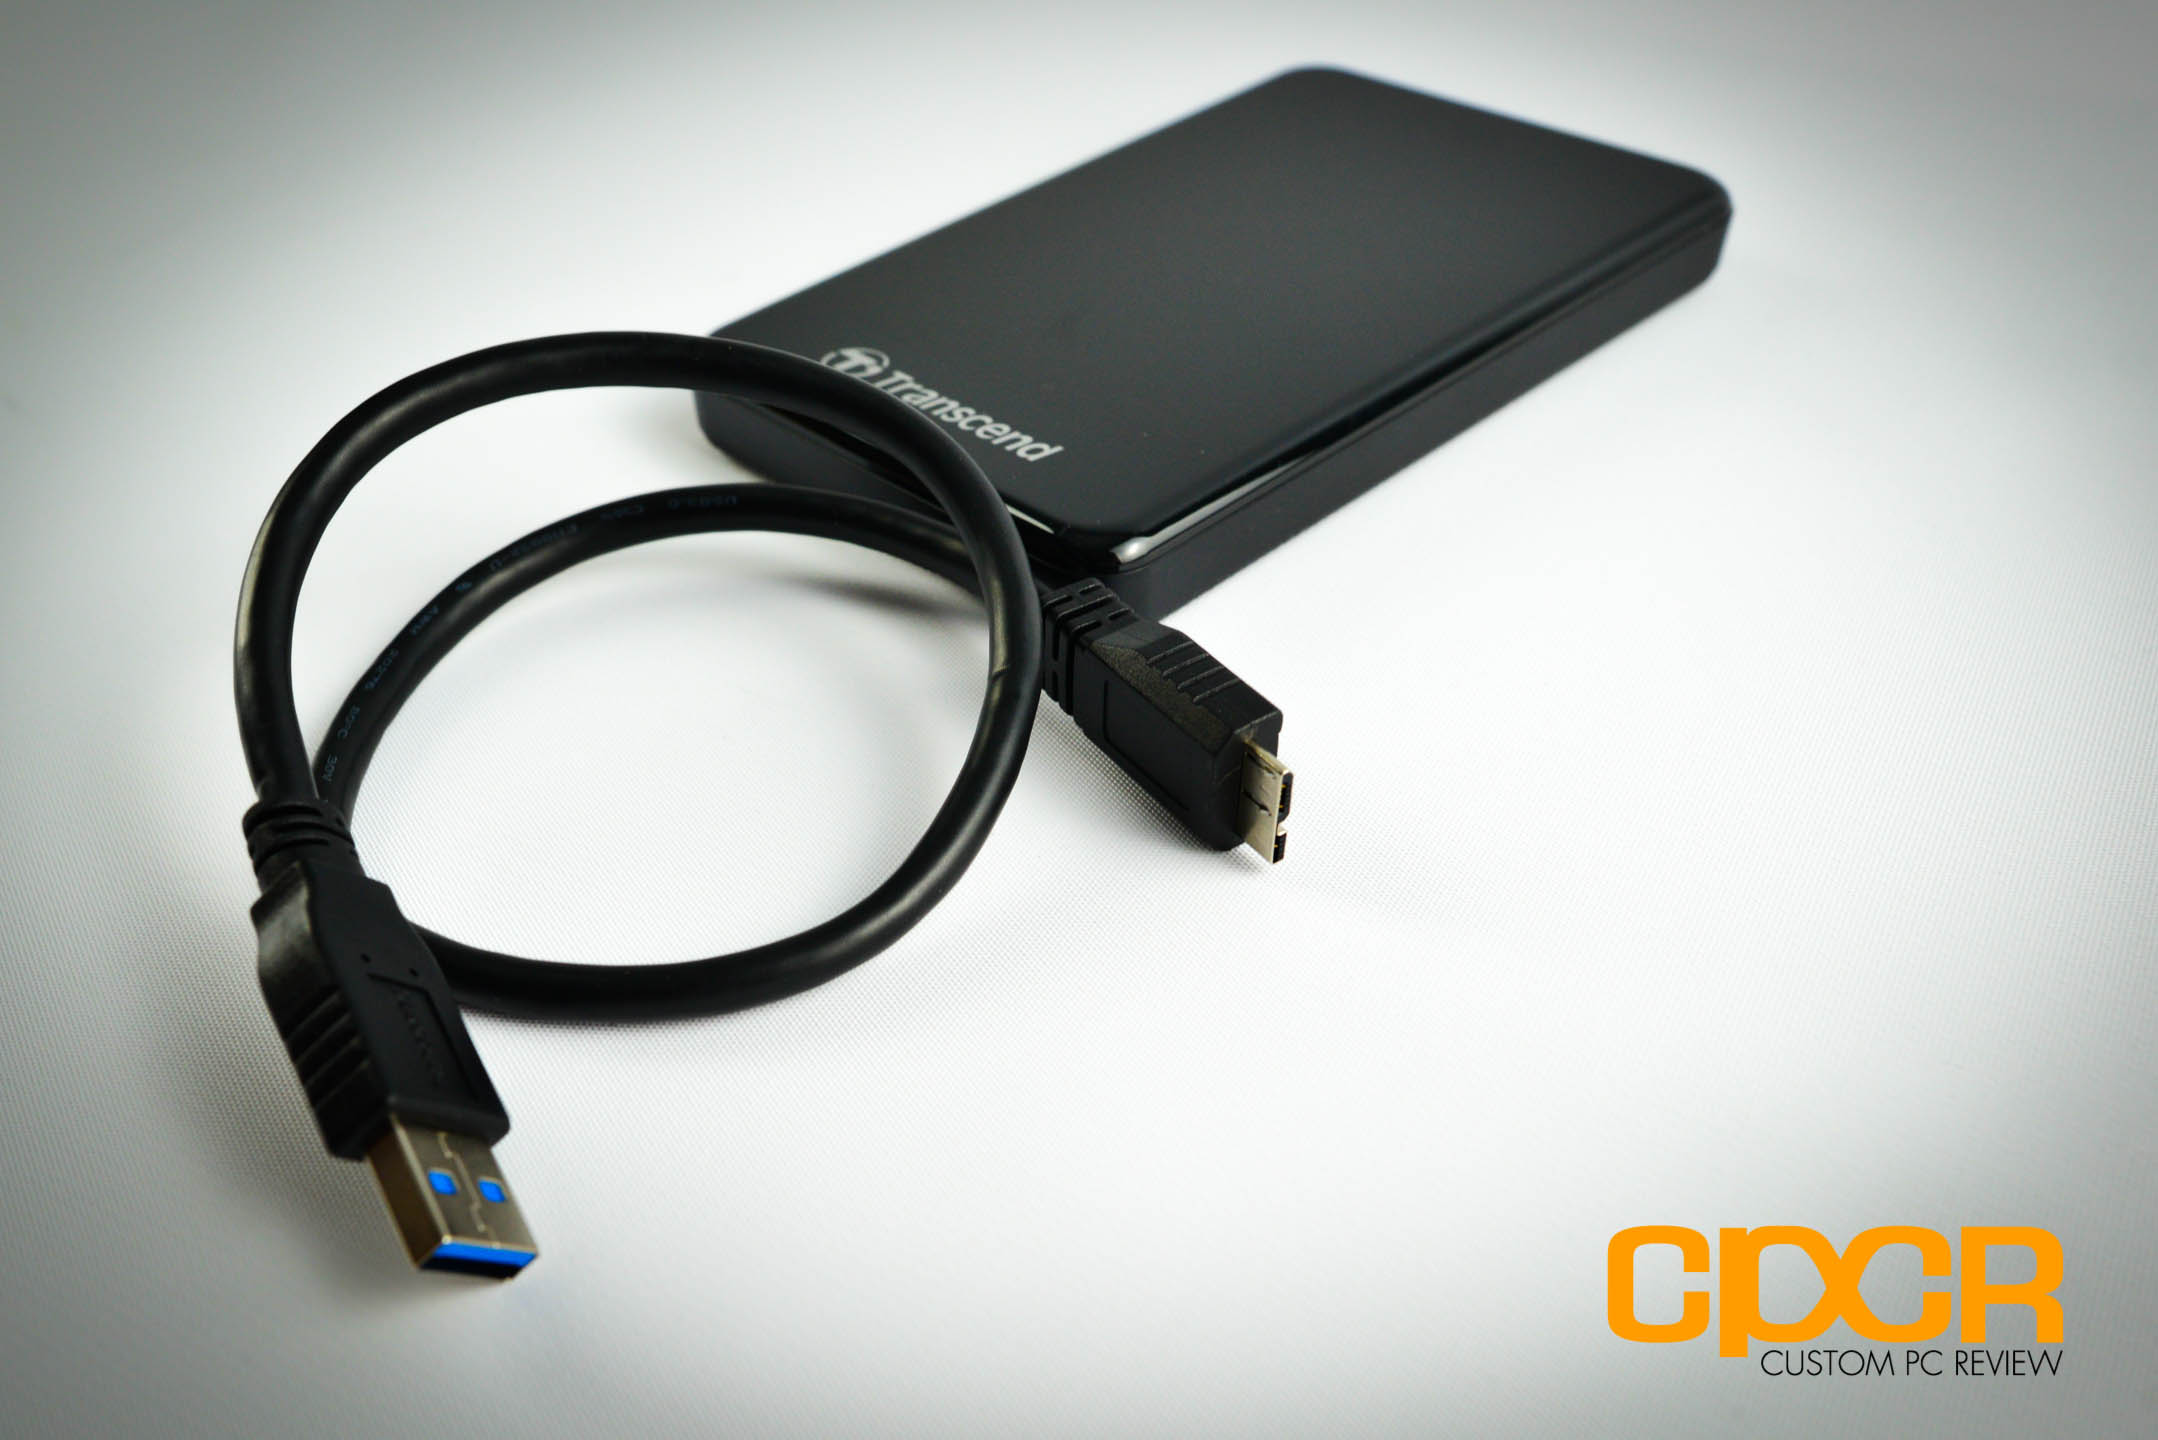 Review: Transcend StoreJet 25A3 1TB USB 3.0 Portable Hard Drive